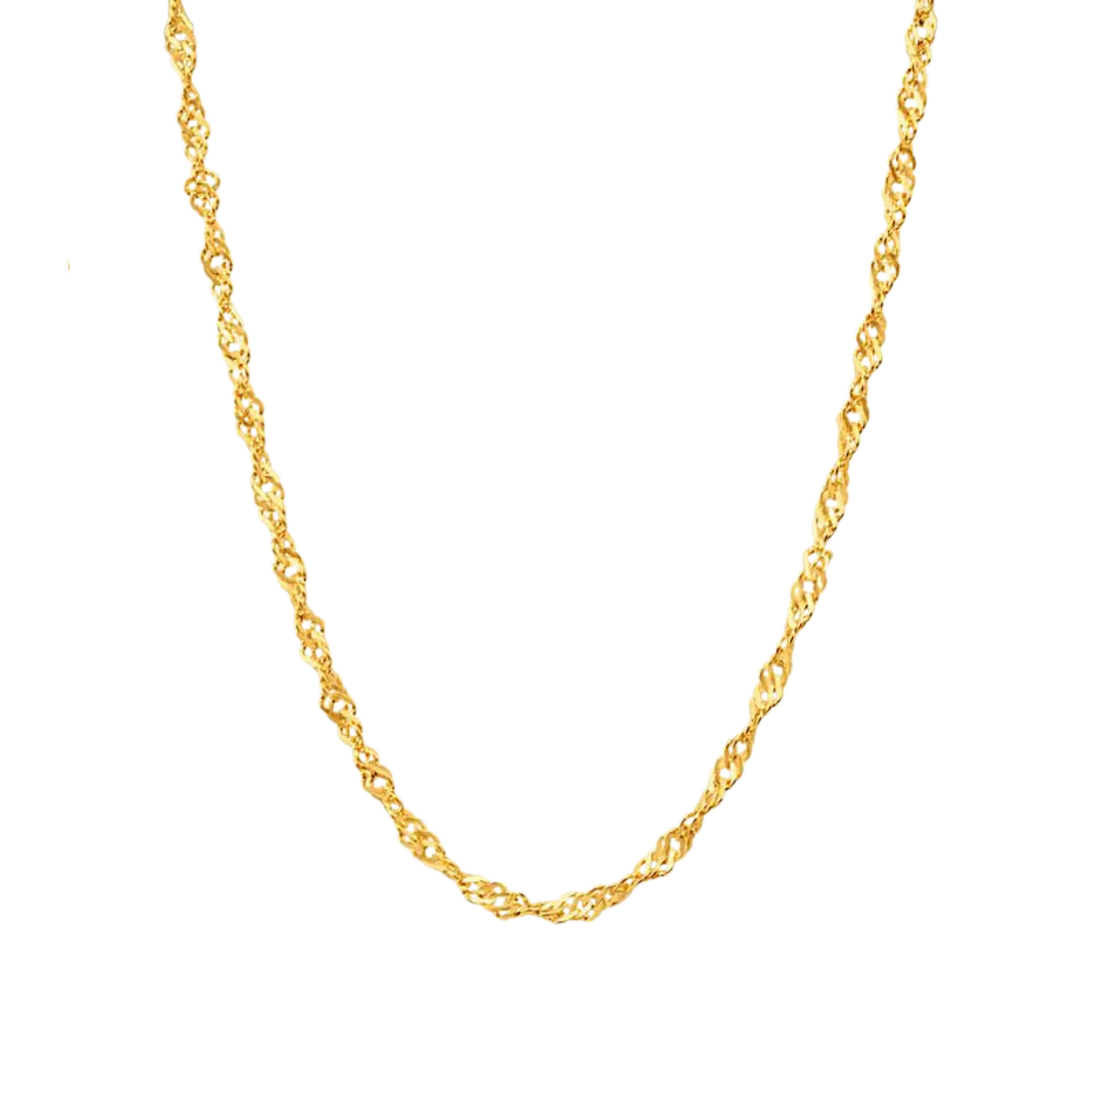 gold singapore chain toronto, 10k gold singapore chain canada, buy online 10k singapore chain, gold chain toronto